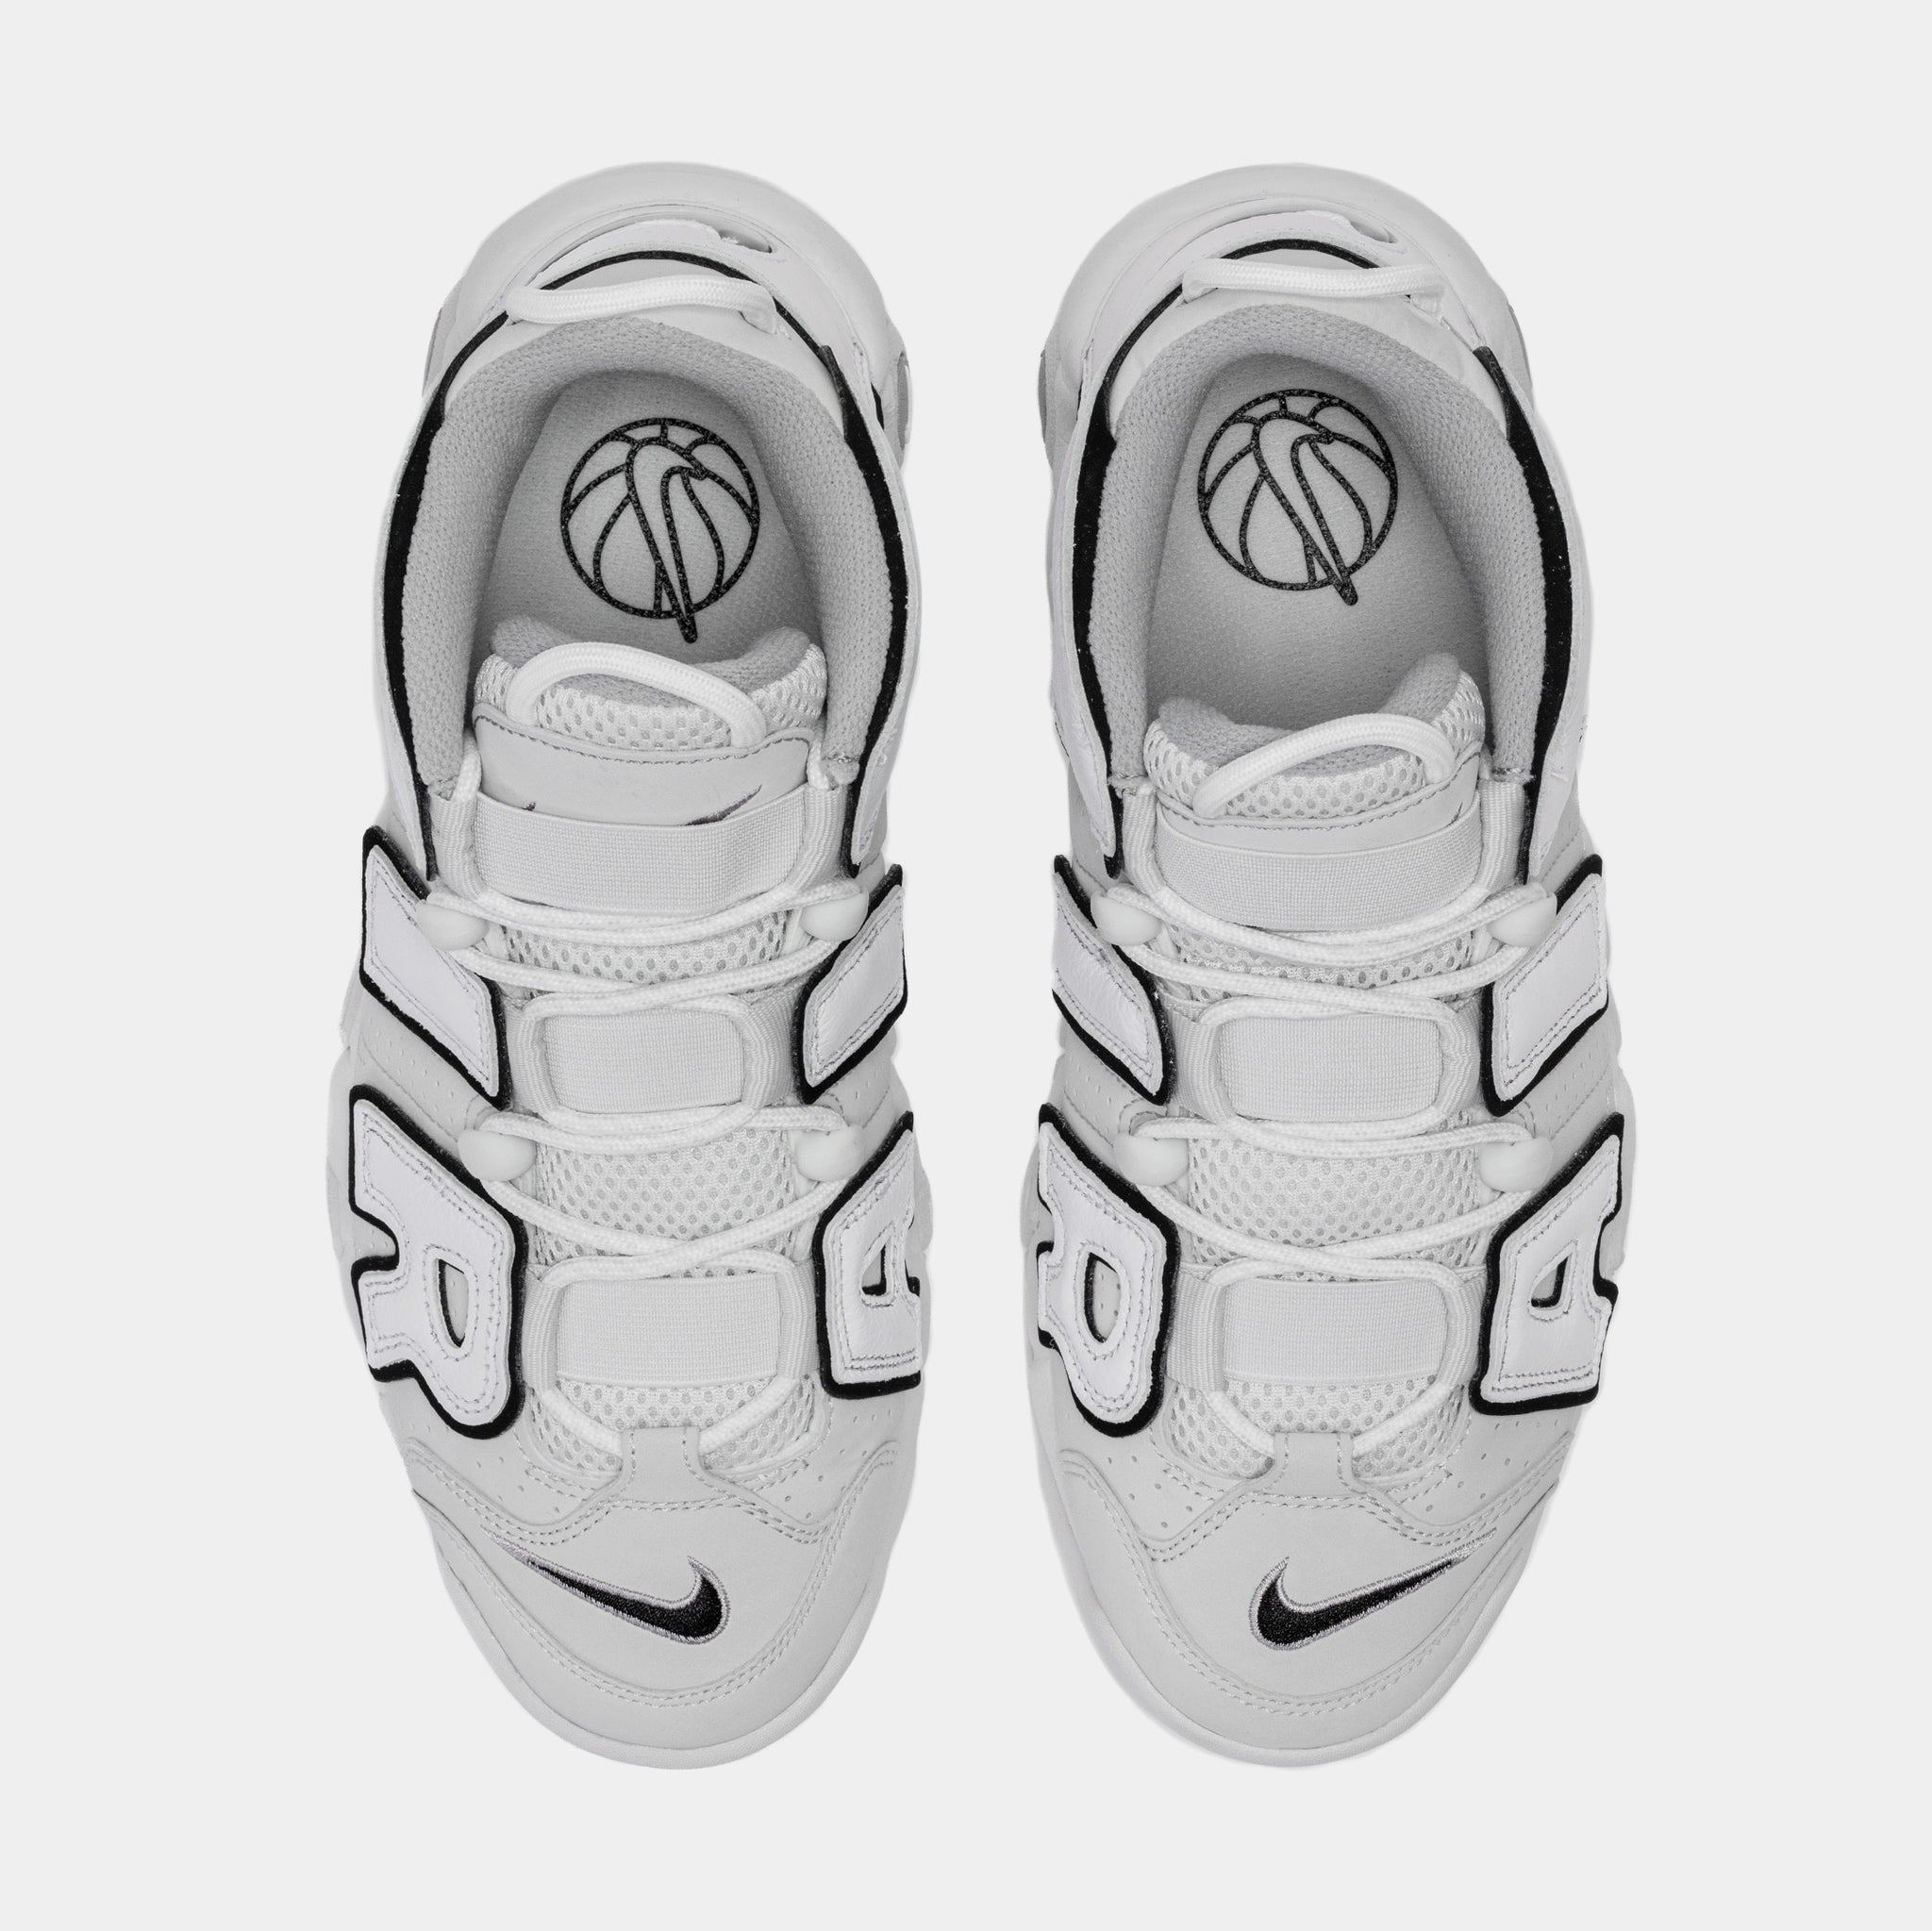 Size 12 Nike Air More Uptempo Tri-Color 2017 Black/Grey/White